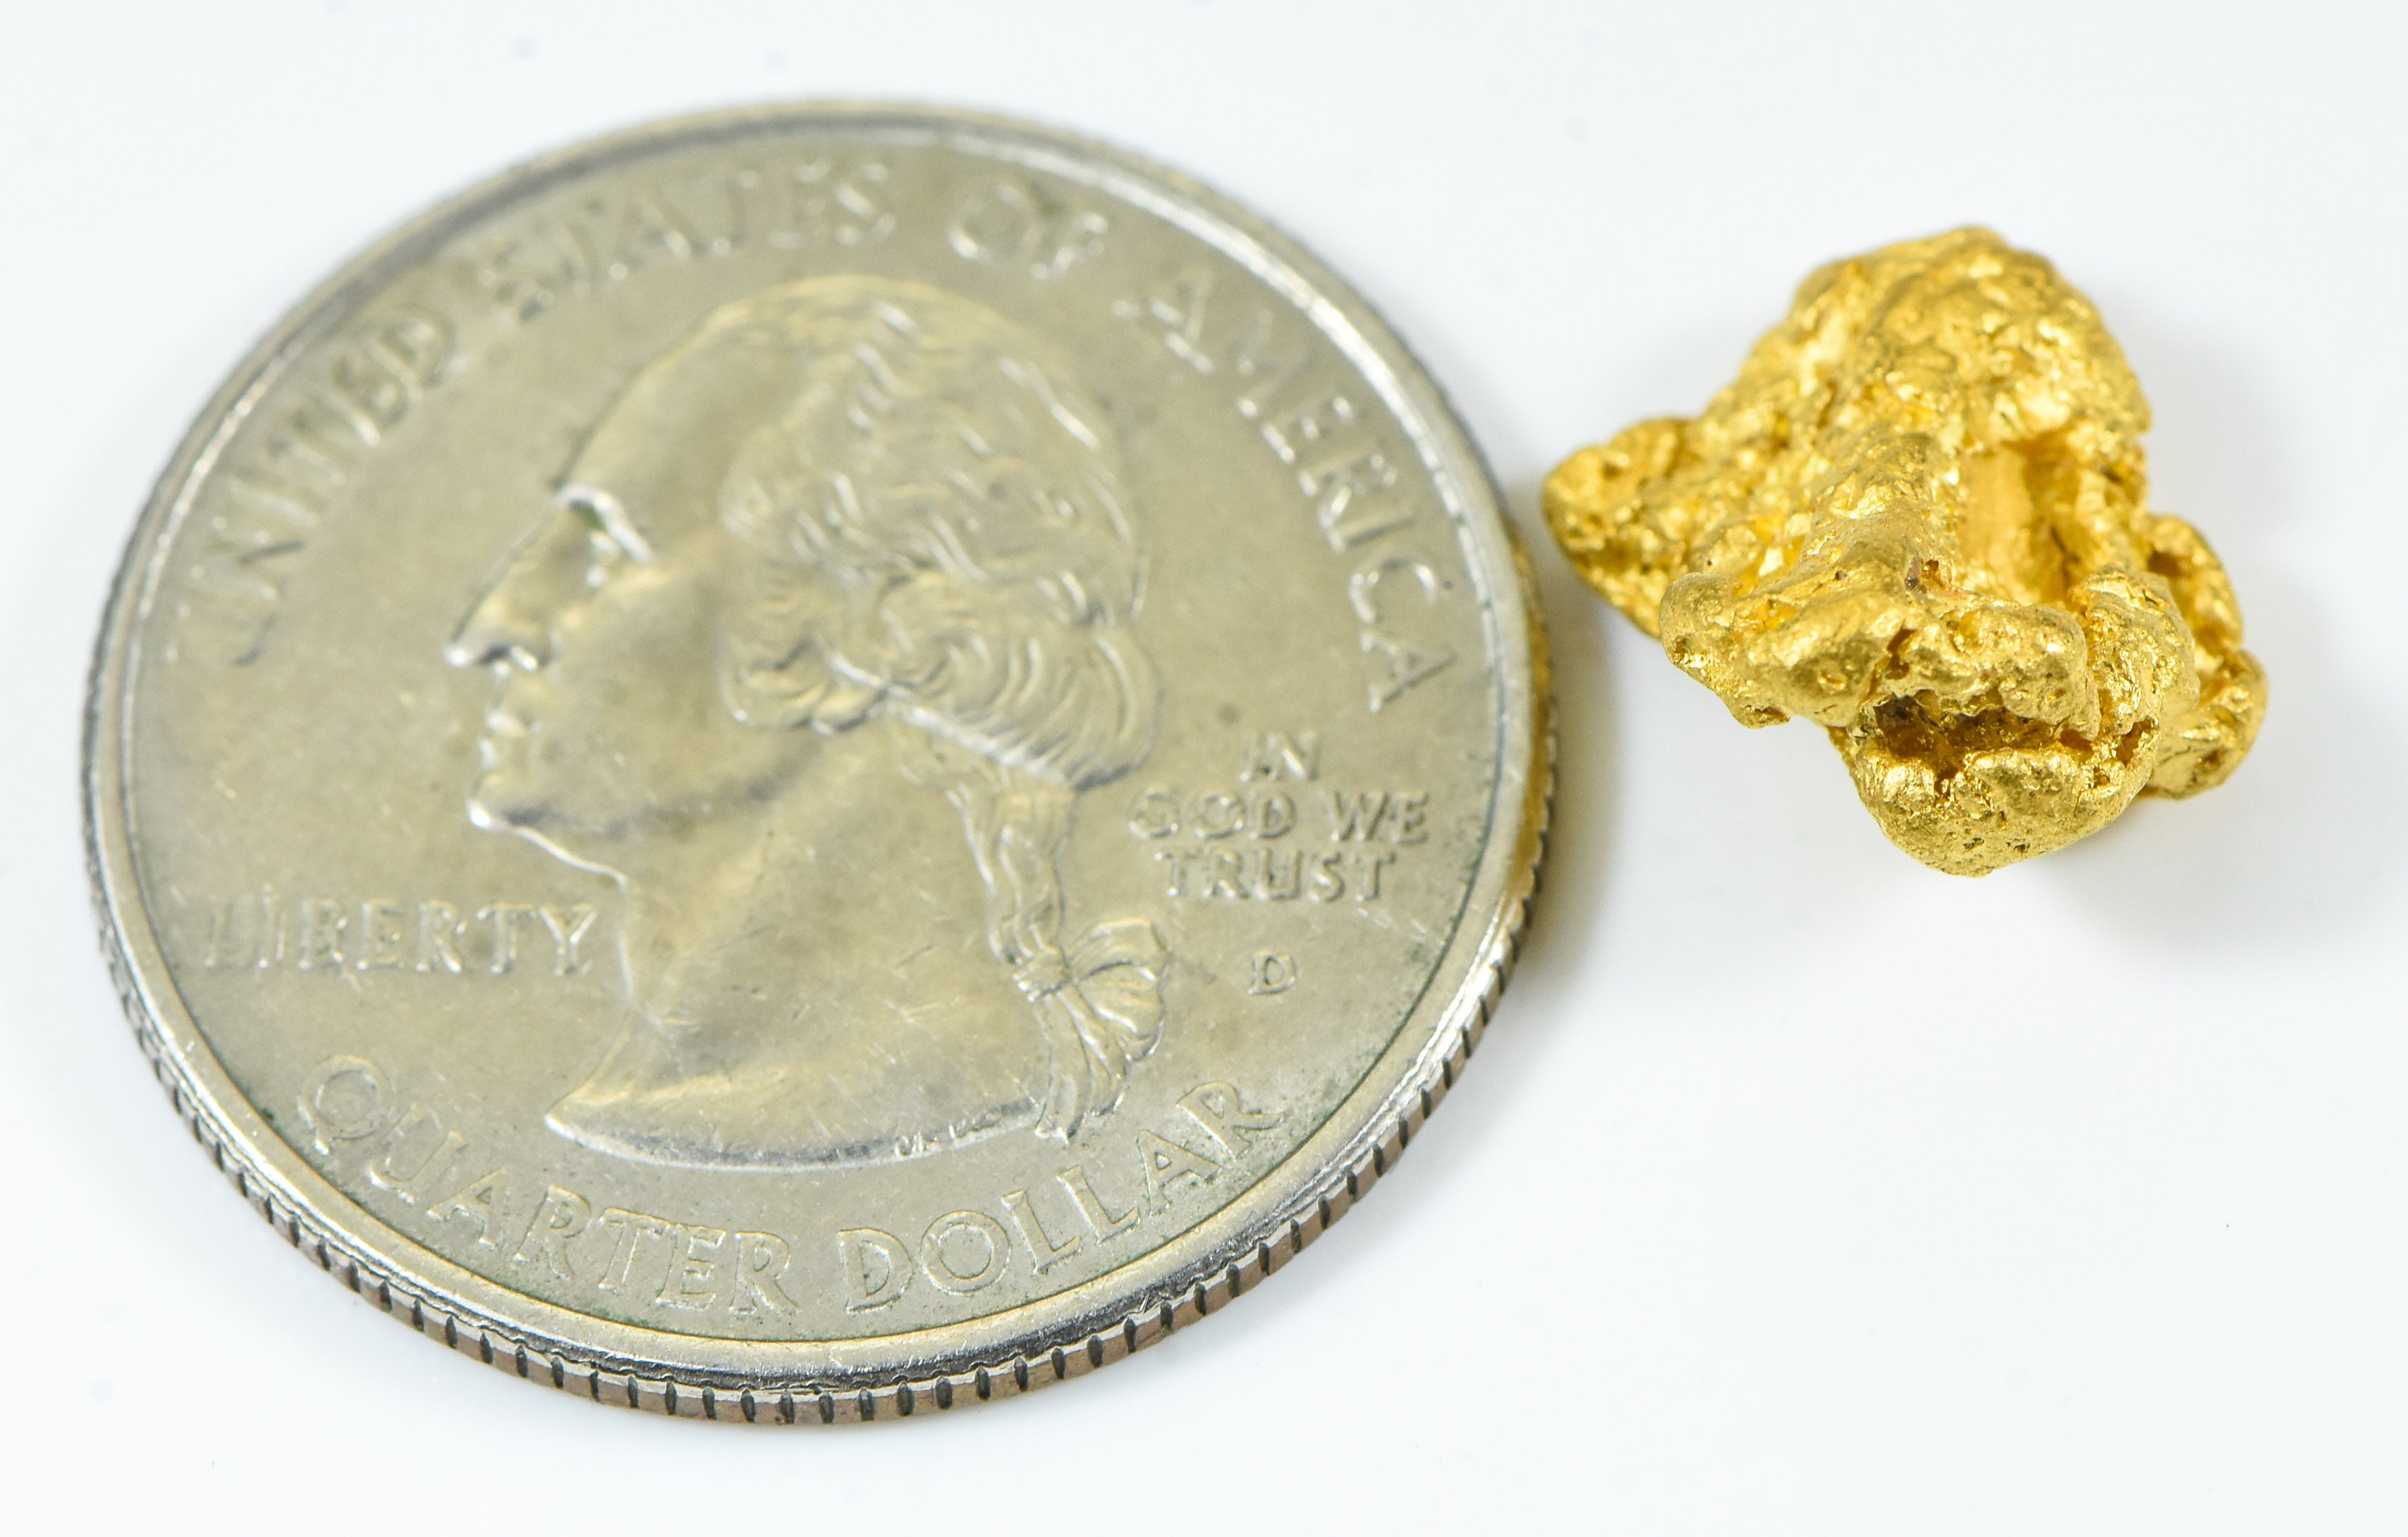 #979 Natural Gold Nugget Australian 4.01 Grams Genuine